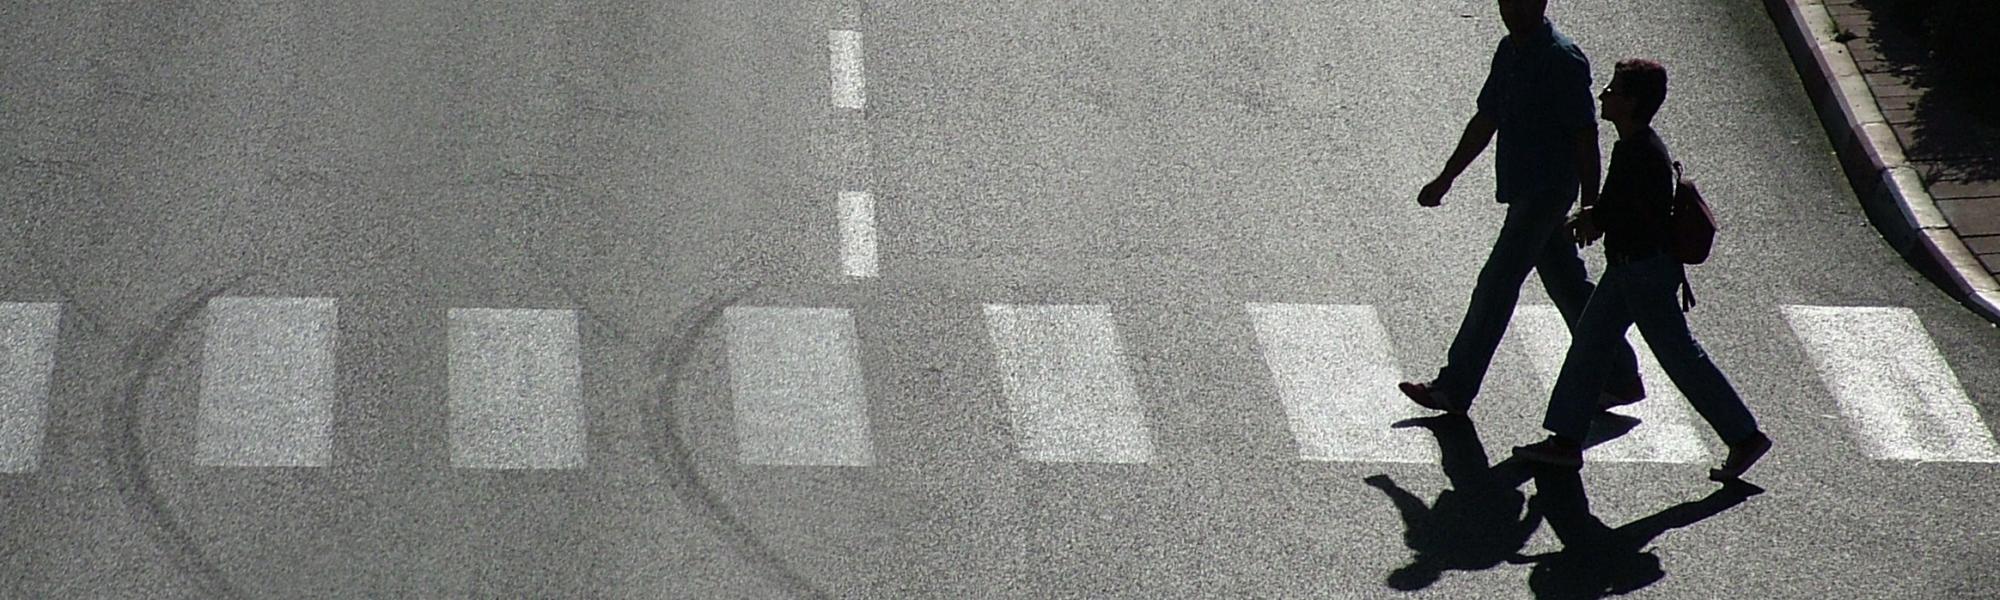 two people crossing the road zebra crossing